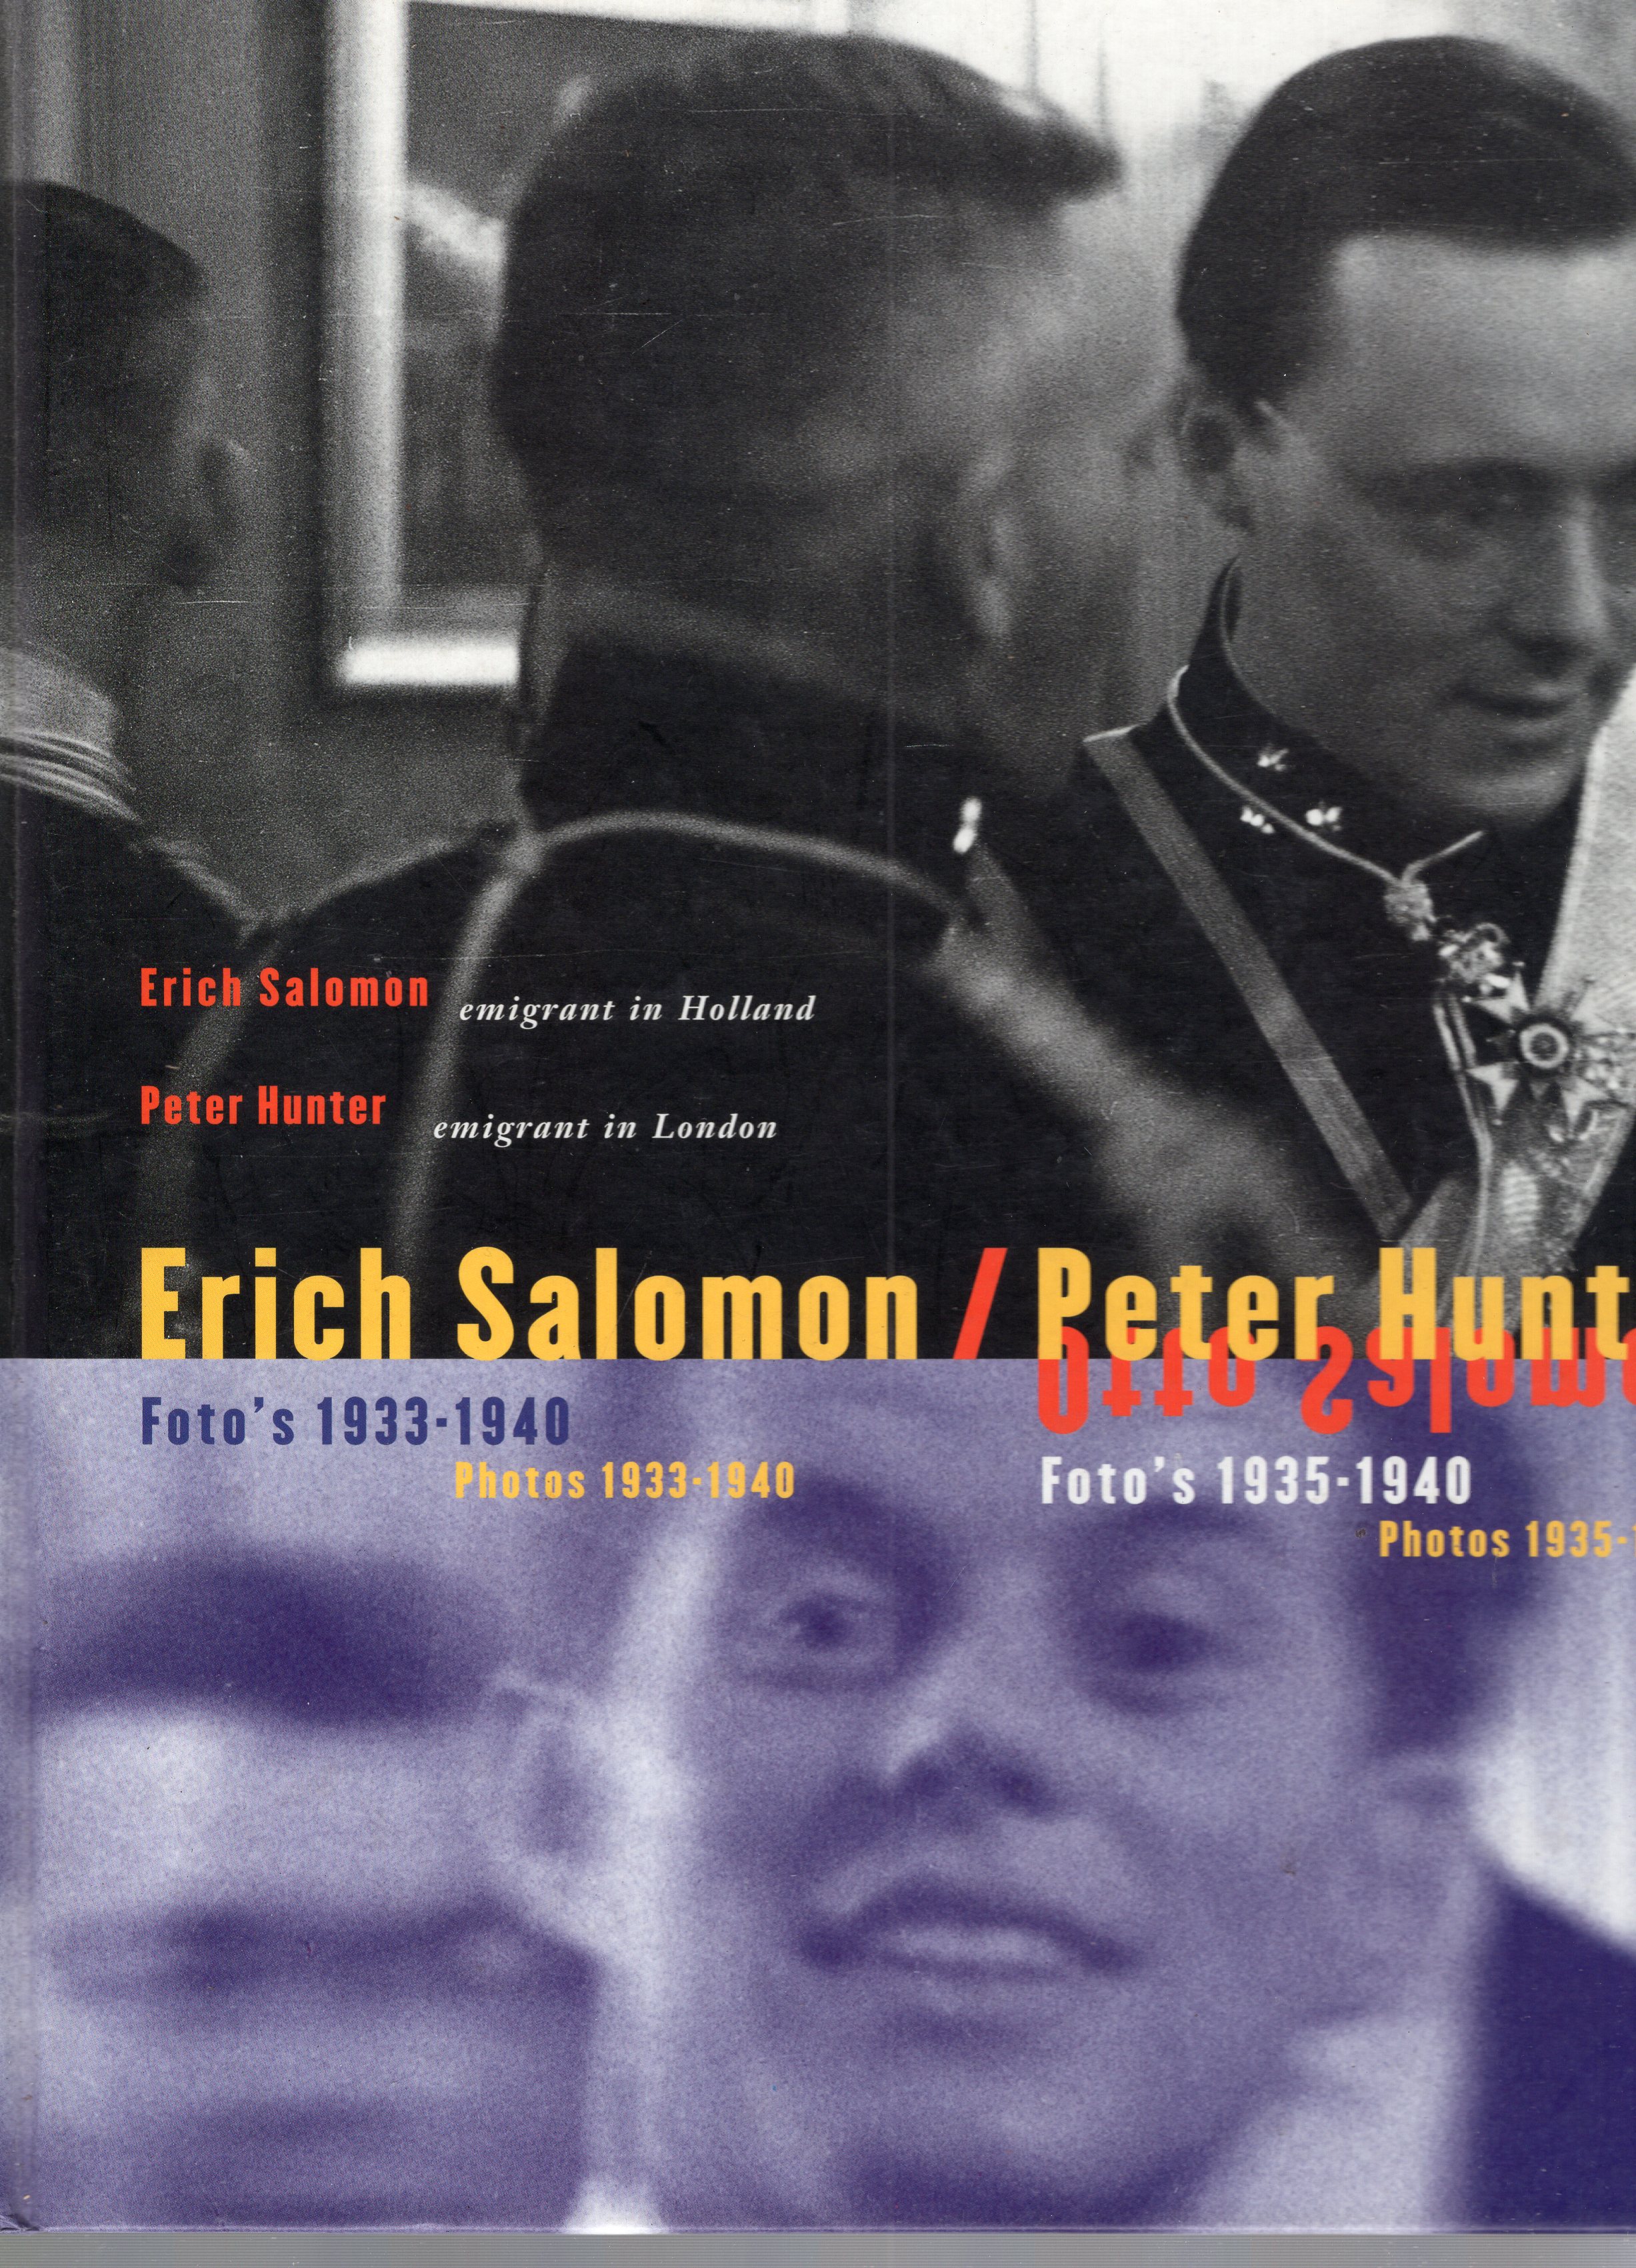 Salomon, Erich; Peter Hunter - Erich Salomon, emigrant in Holland - Peter Hunter, emigrant in London. Phots 1935-1940.